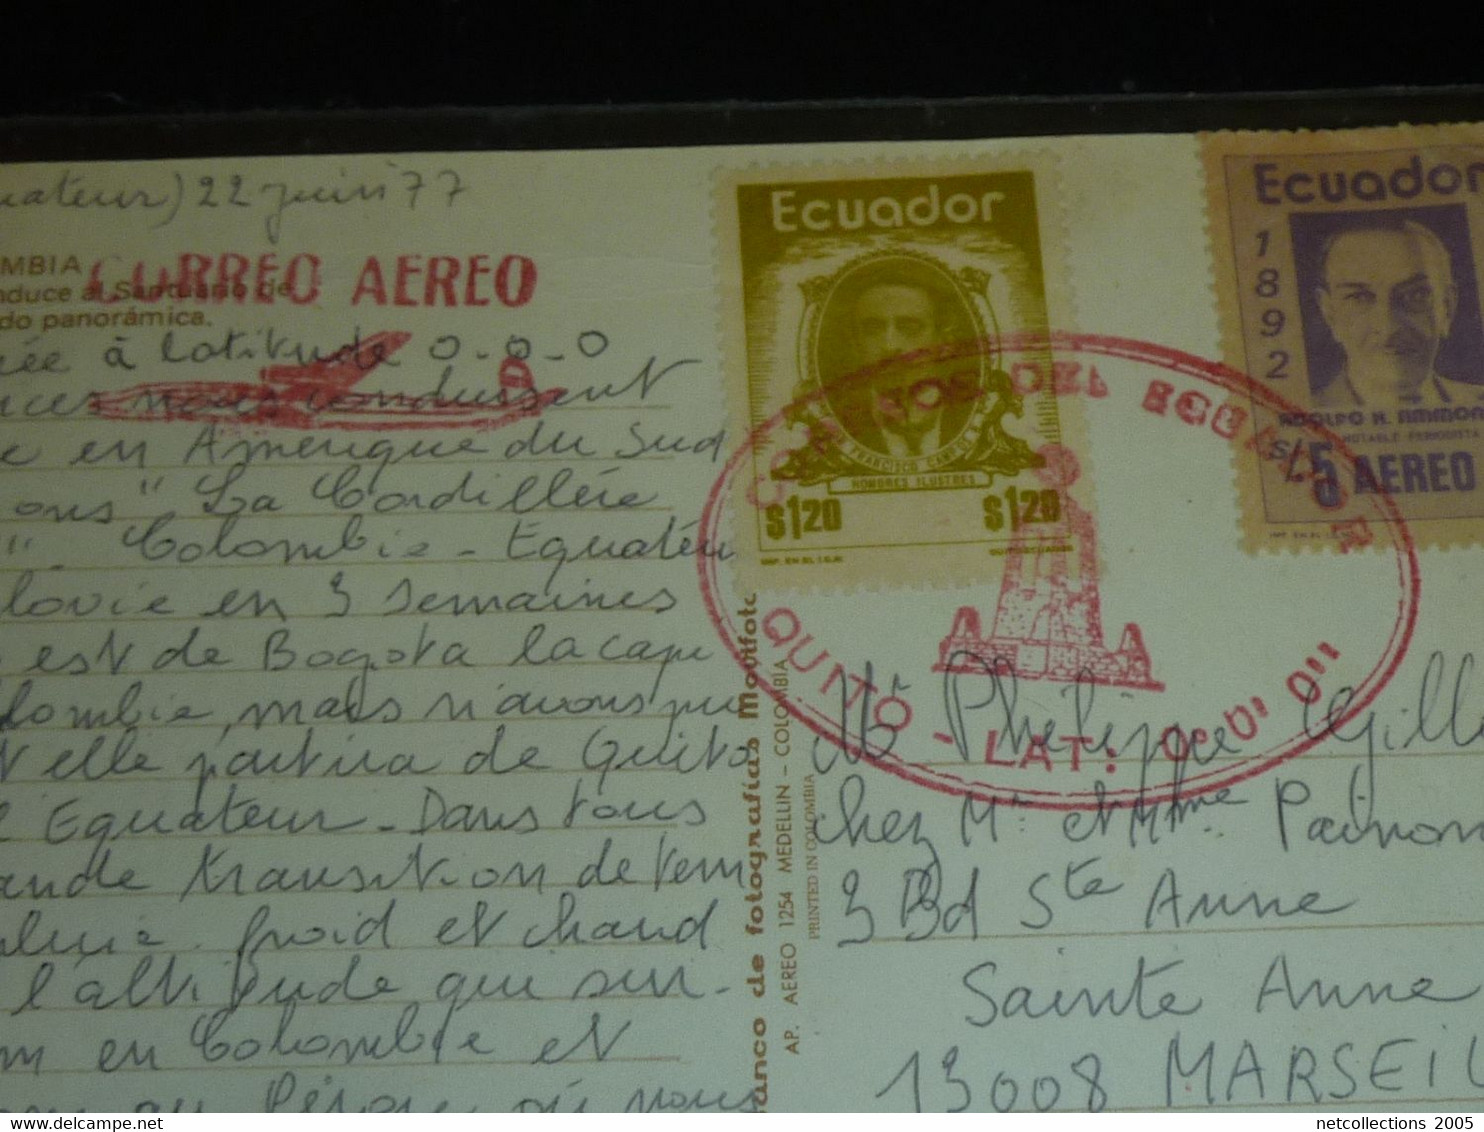 BOGOTA COLOMBIE - CACHET OVALE ILLUSTREE " CORREO AERO" 22/06/1977 - TP N°908 & N°586 (03/23) - Colombie